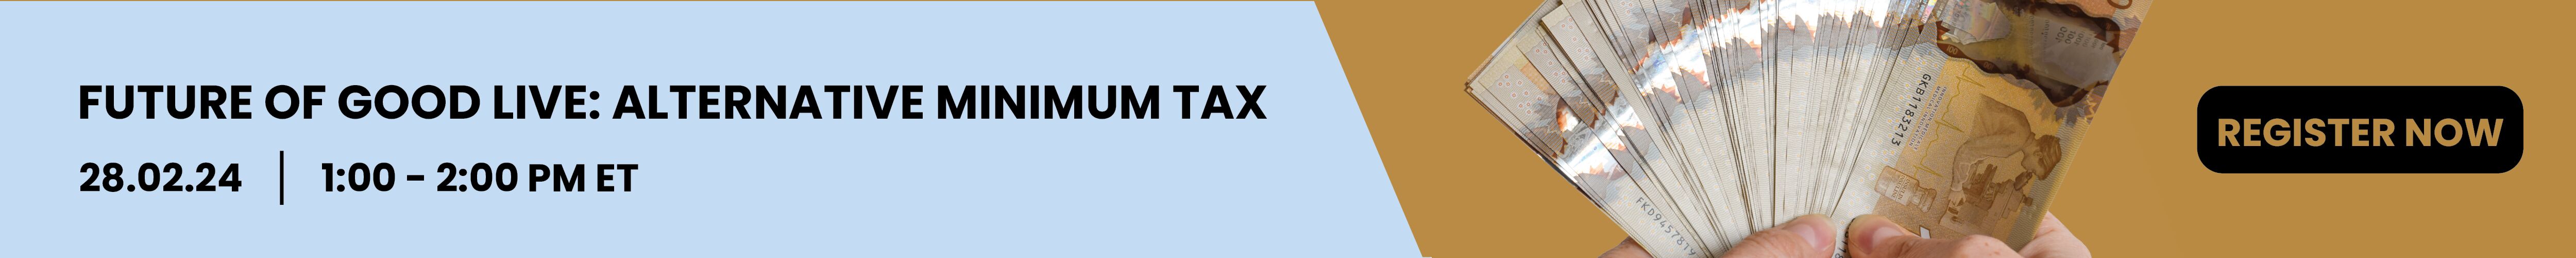 Alternative Minimum Tax Webinar banner